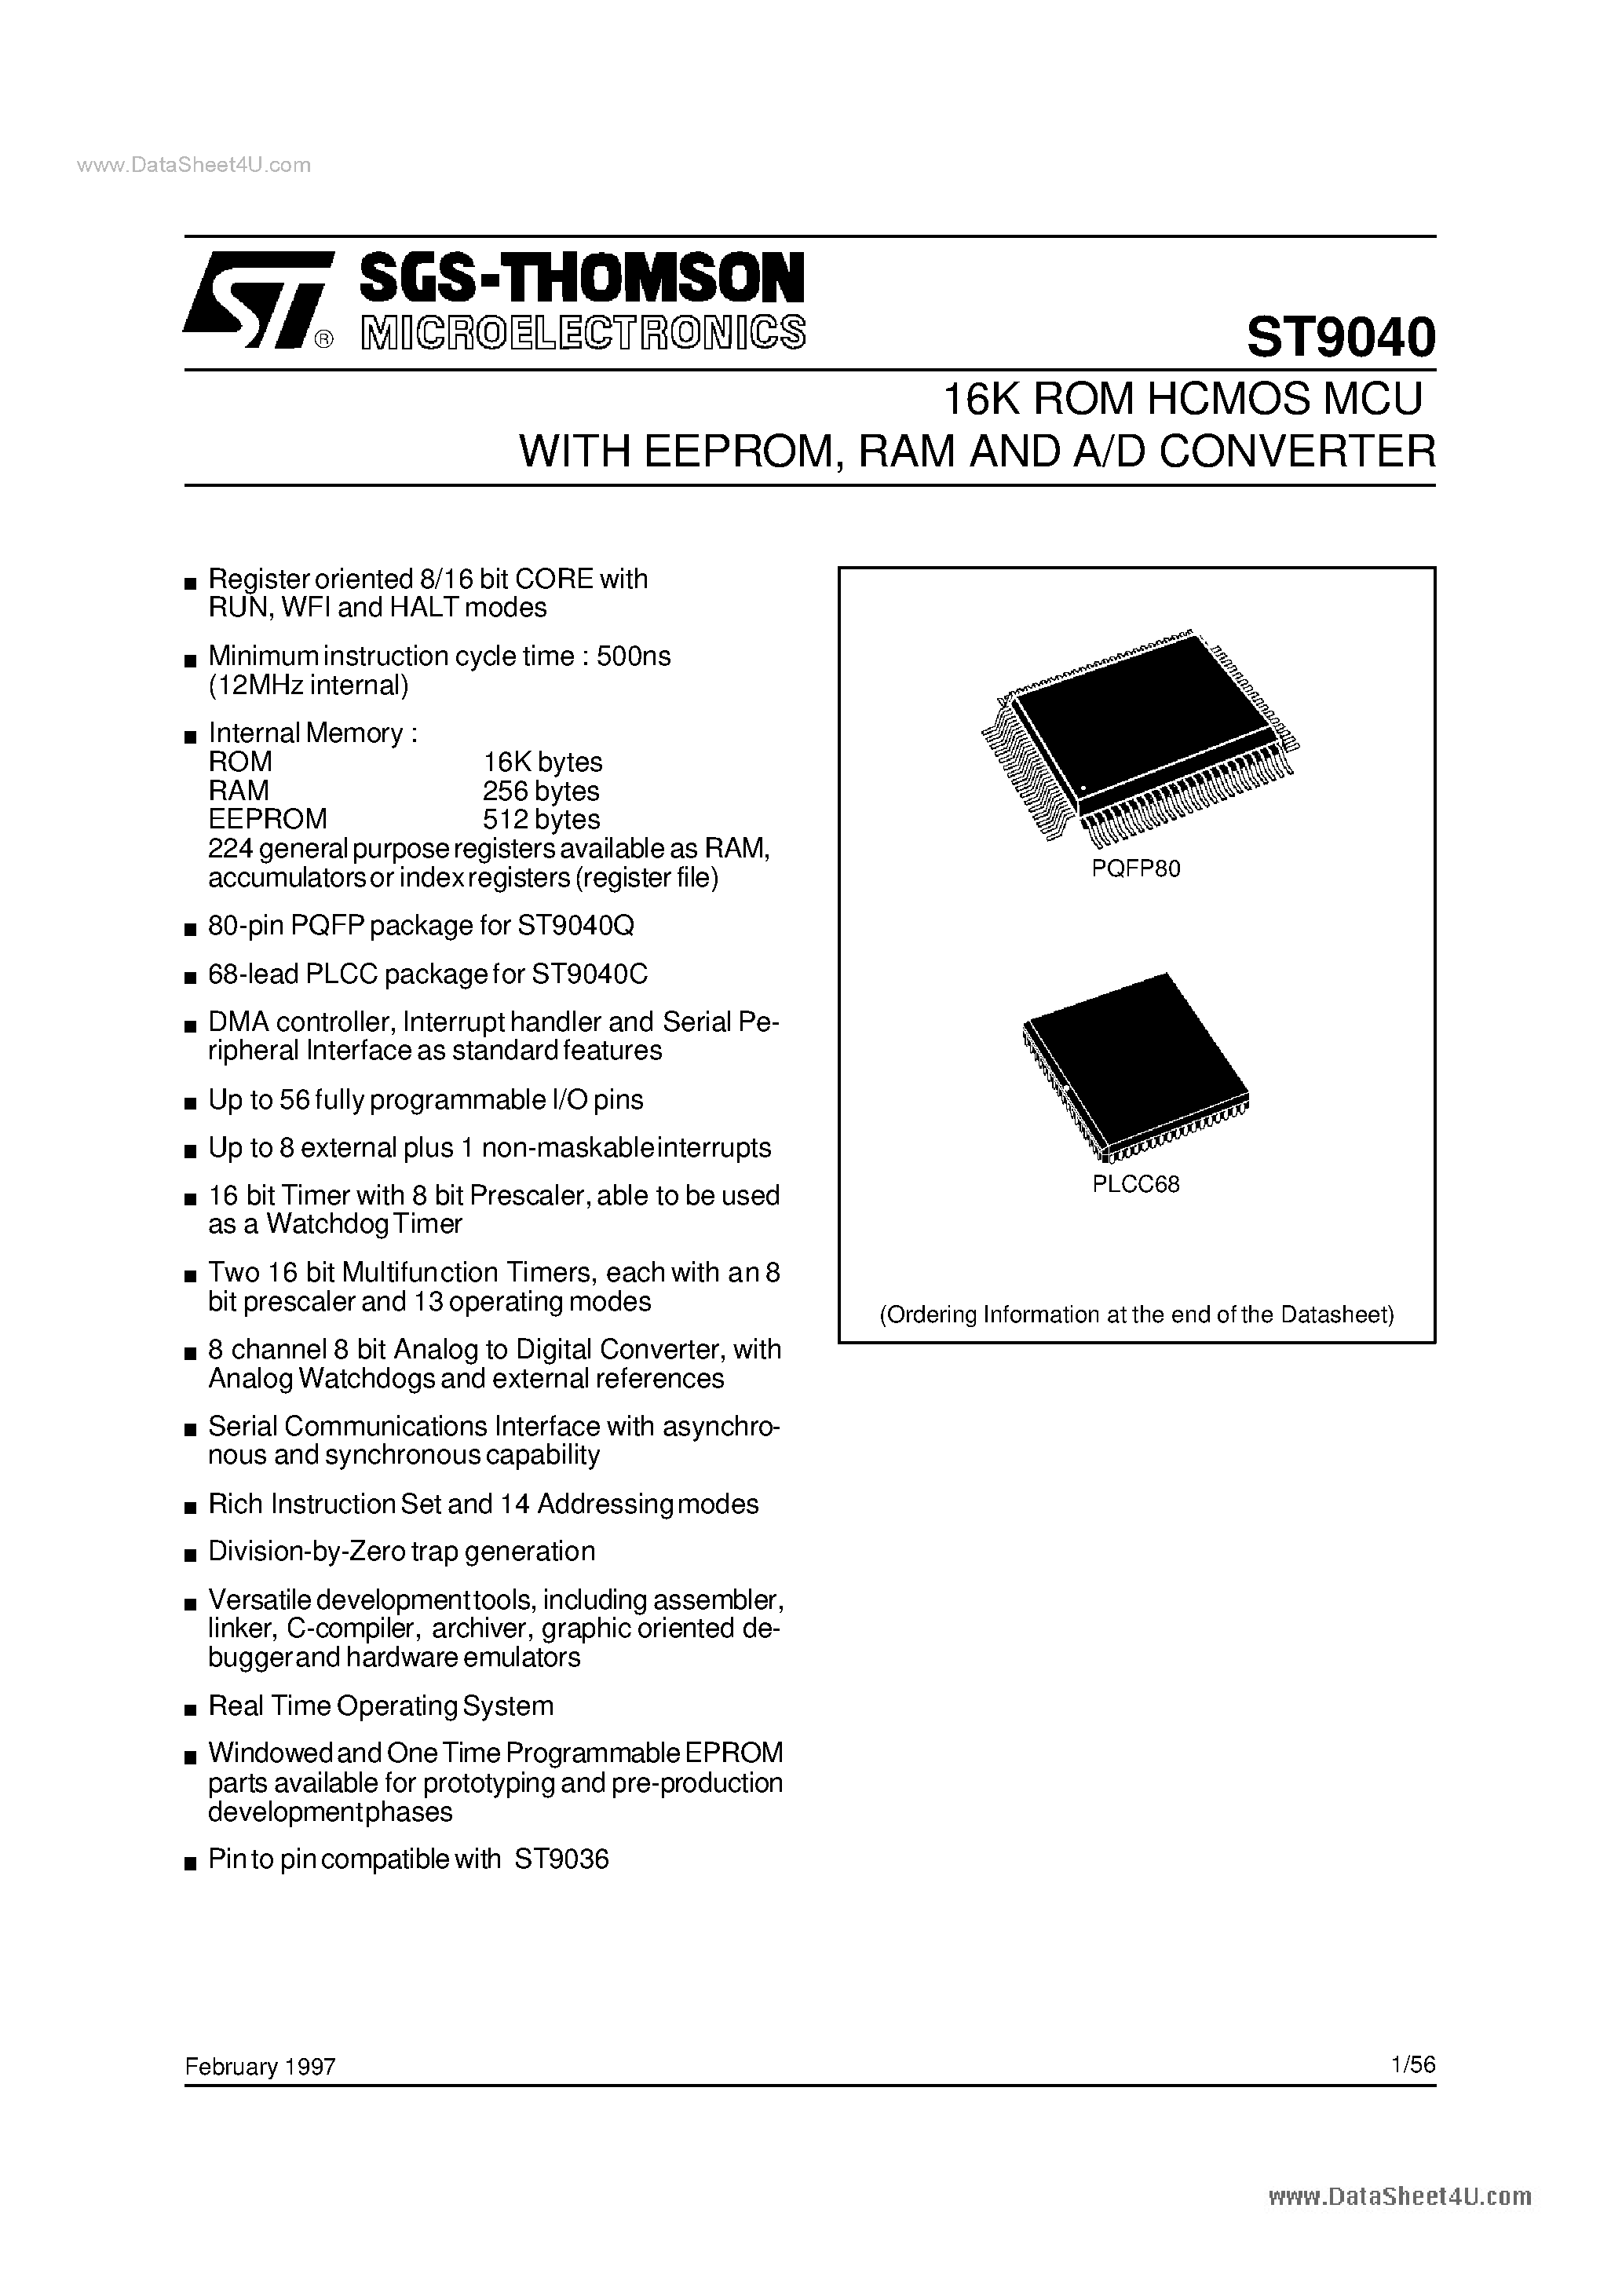 Datasheet ST9040 - 16K ROM HCMOS MCU page 1